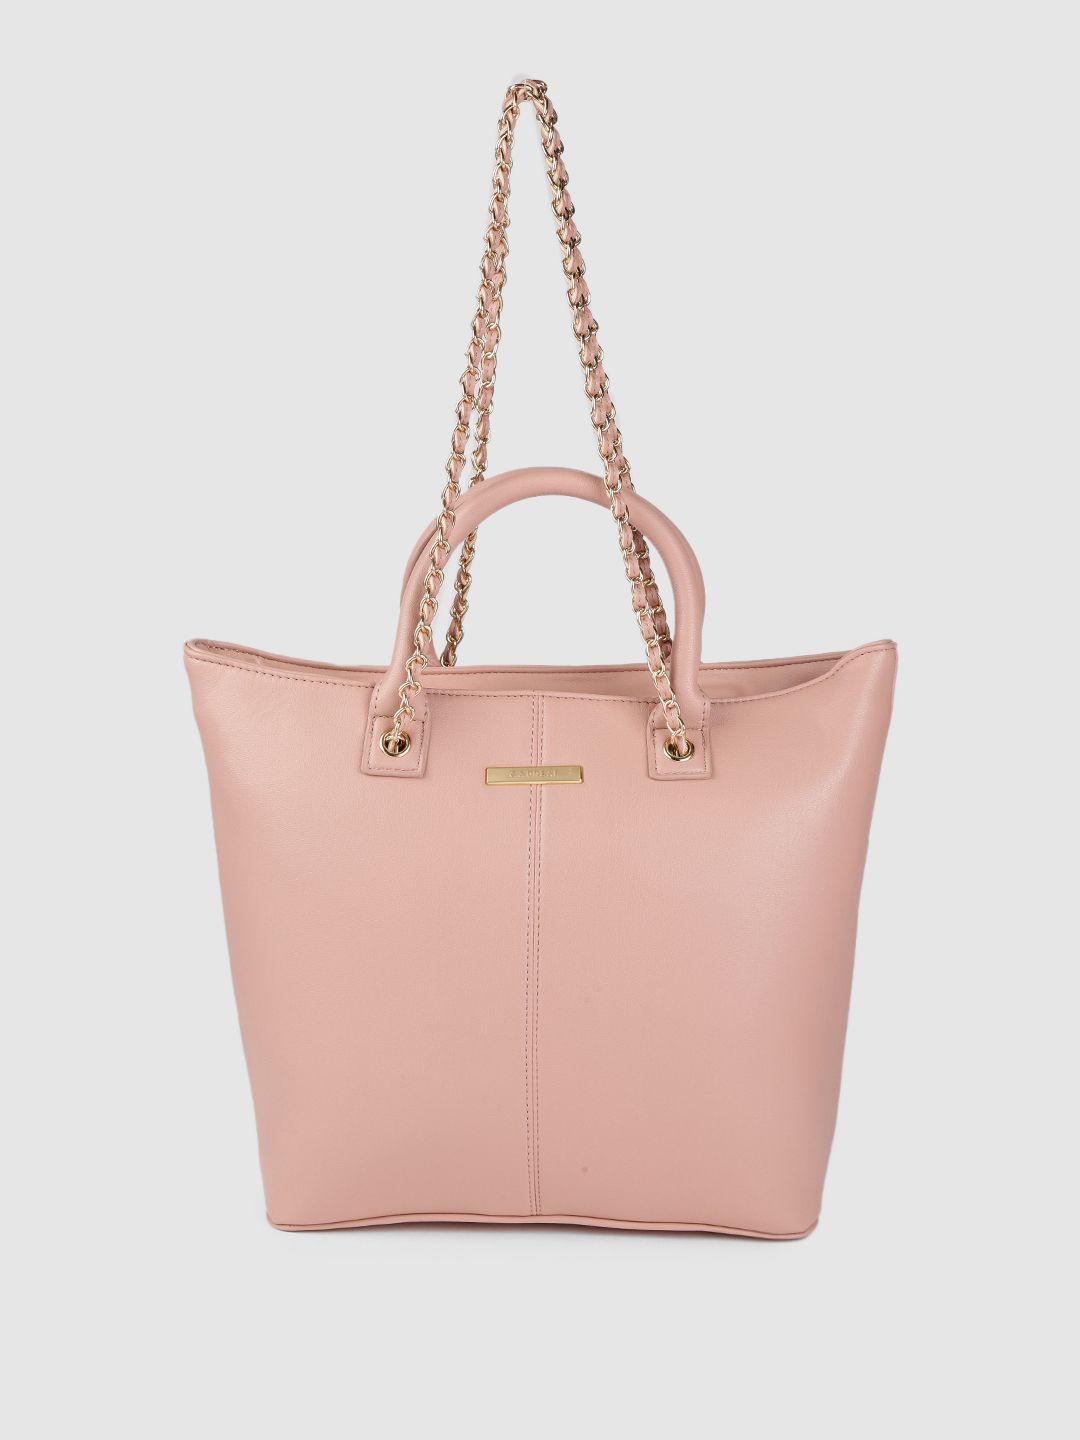 Caprese Pink Solid Handheld Bag Price in India